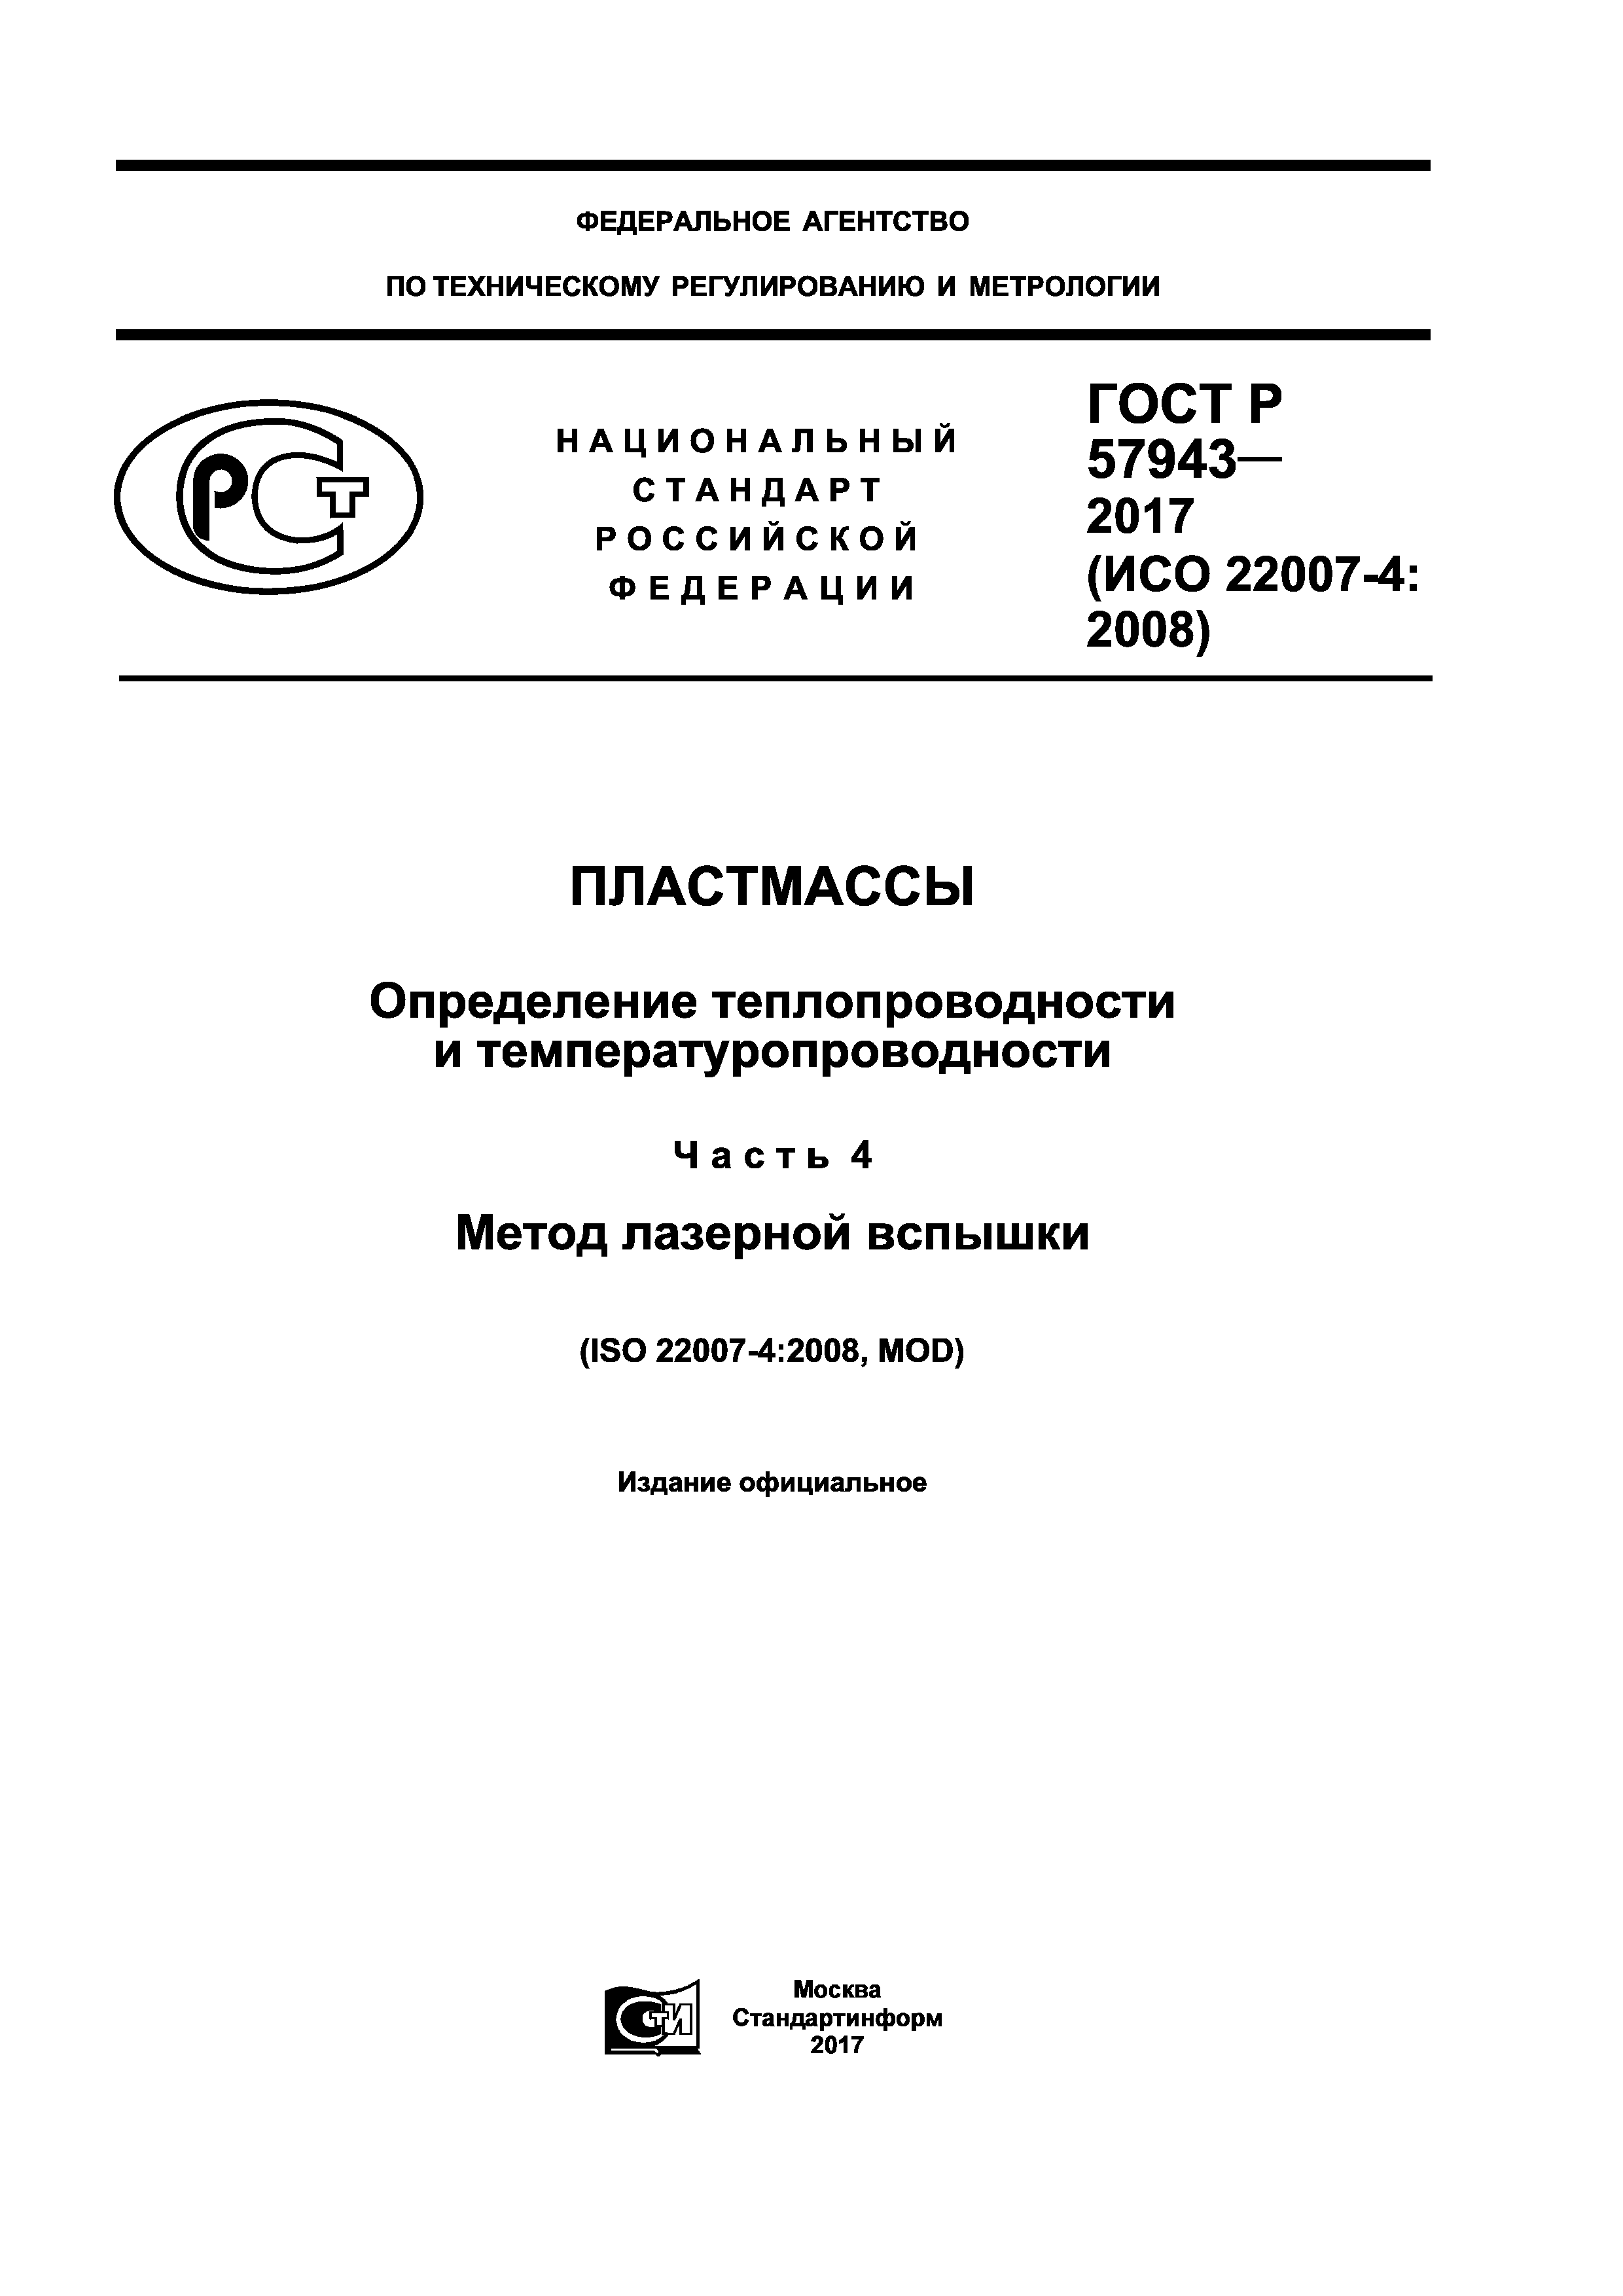 ГОСТ Р 57943-2017